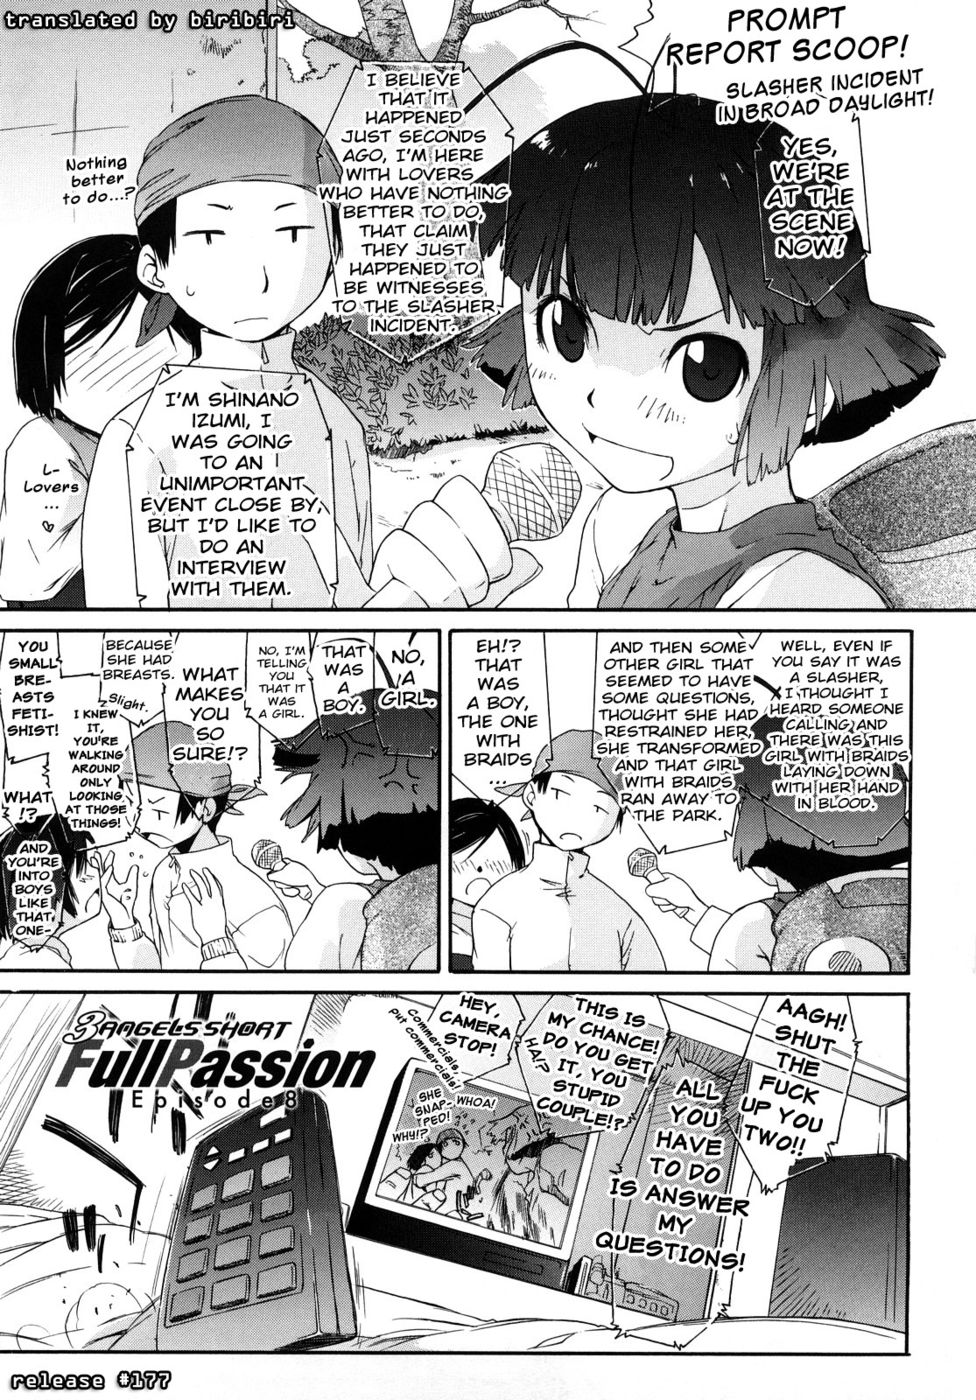 Hentai Manga Comic-3 Angels Short Full Passion-Chapter 9-1